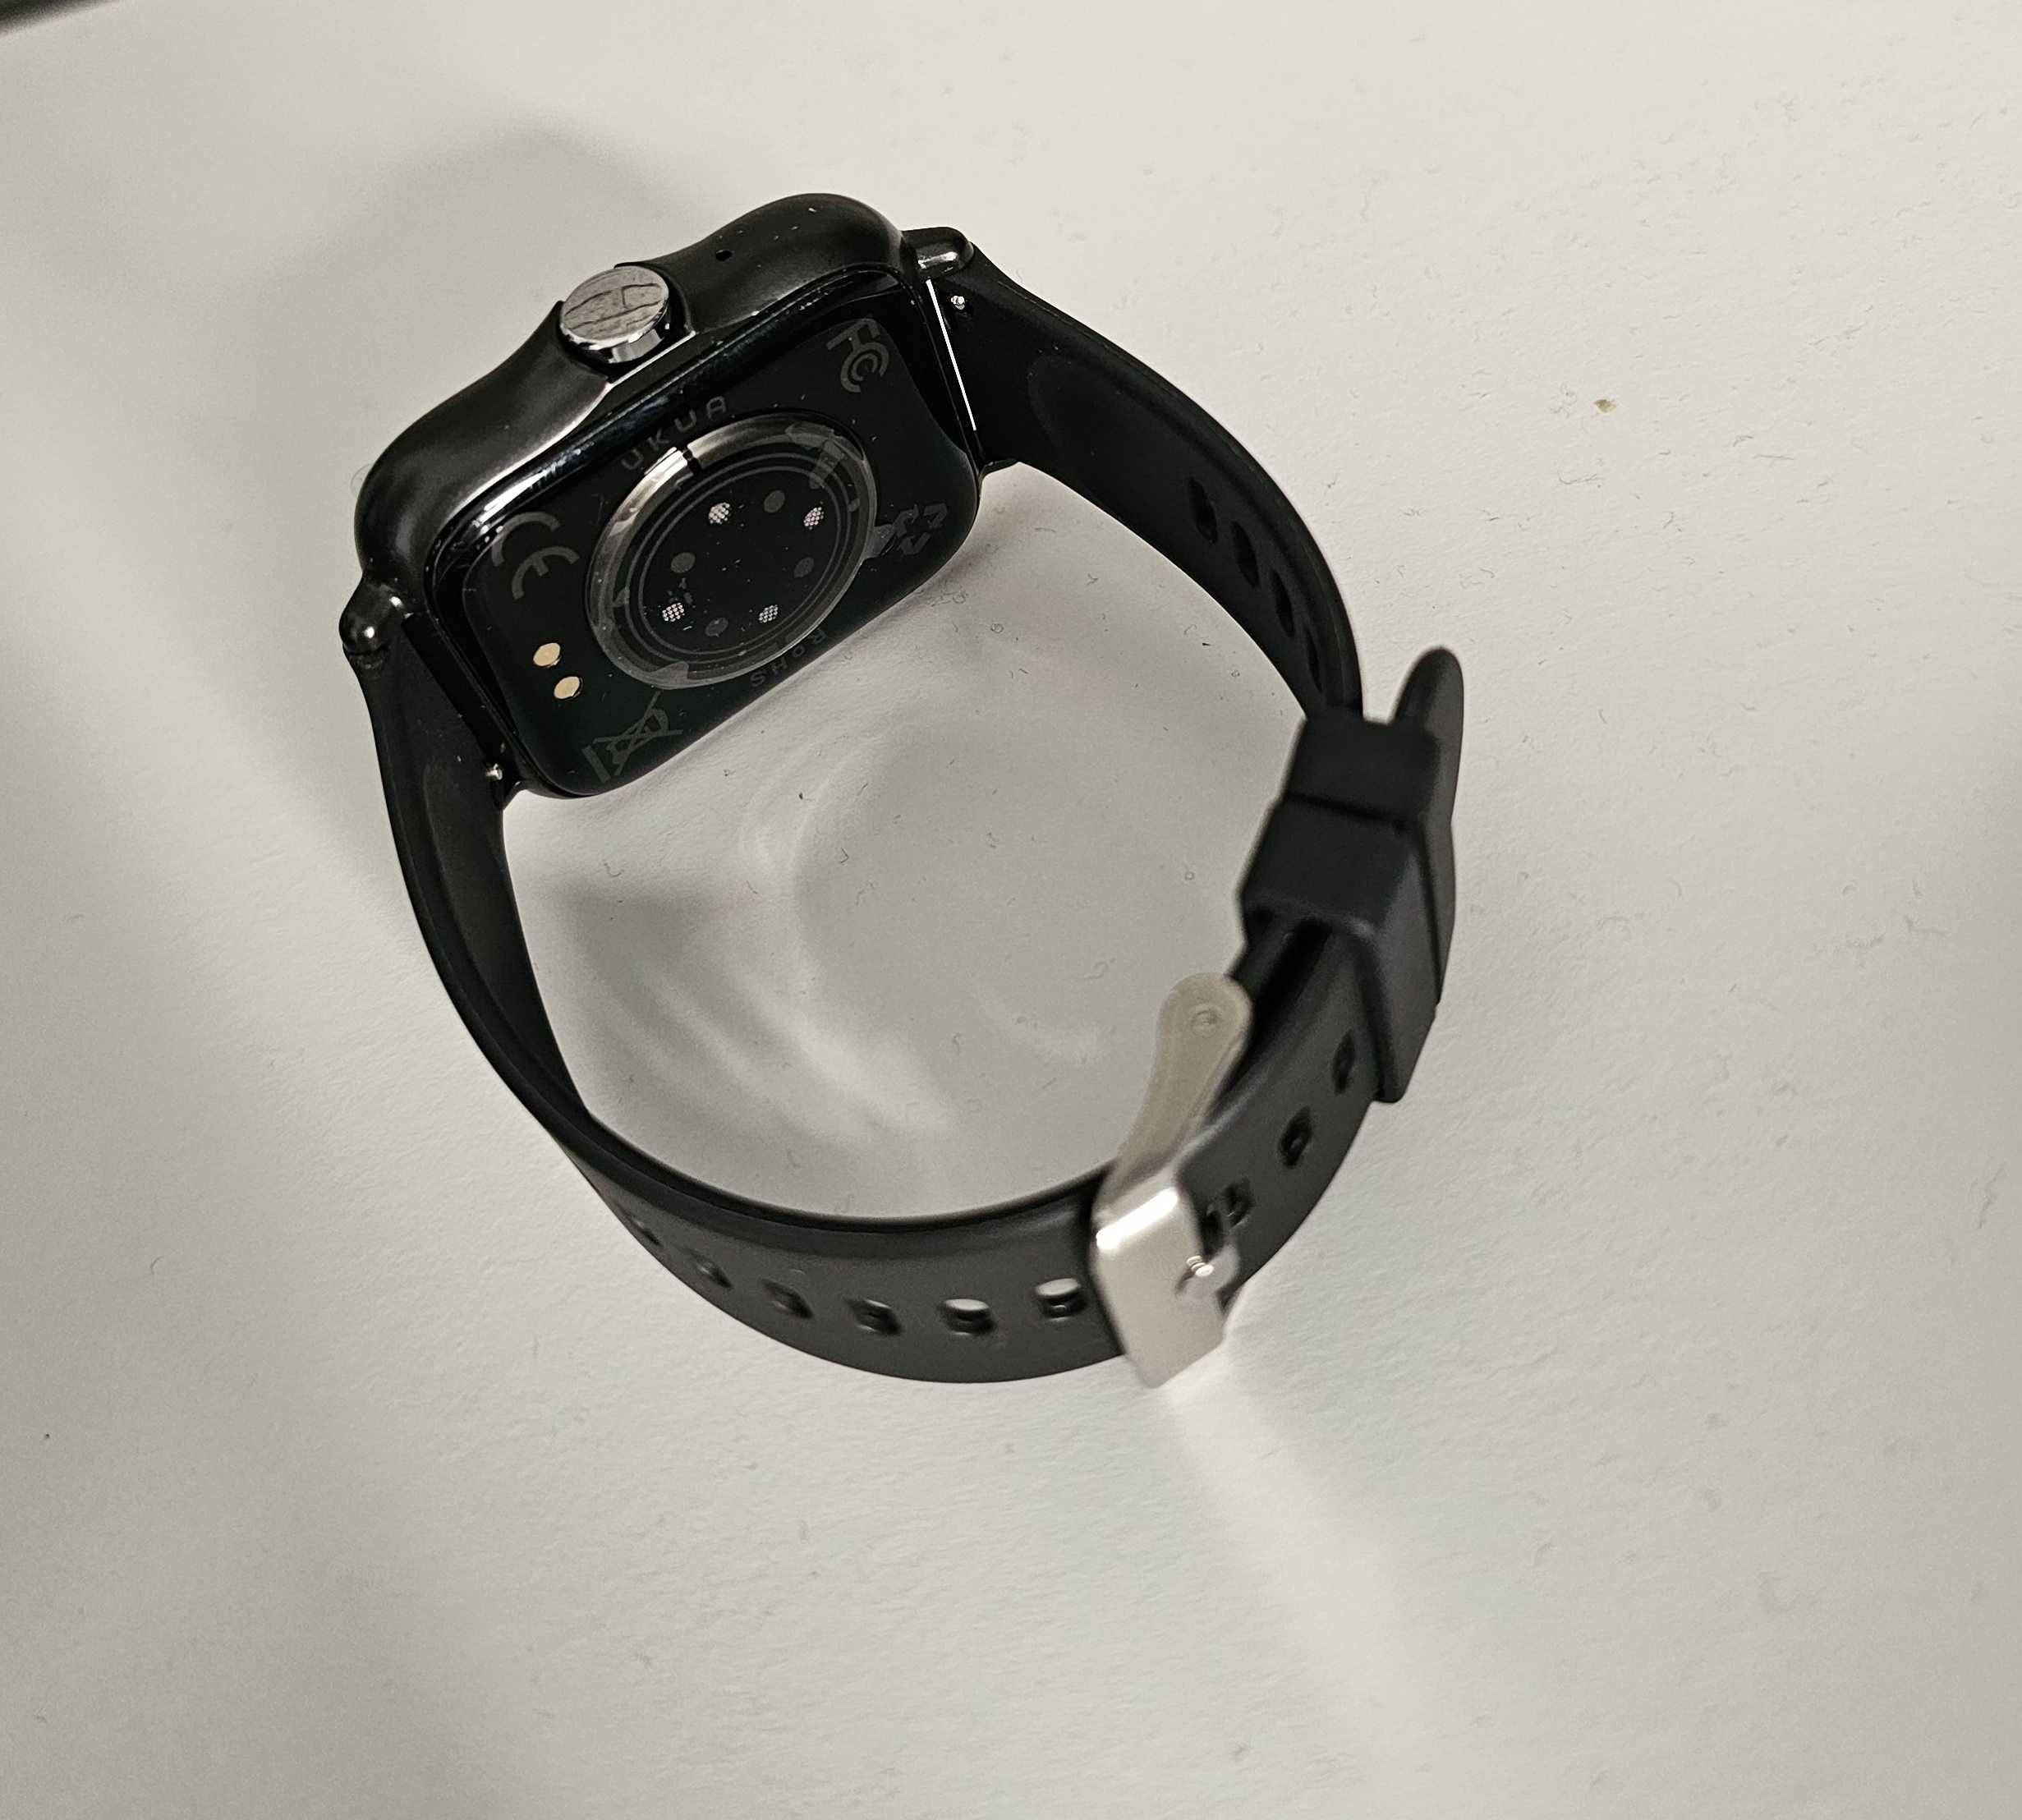 Zegarek Smartwatch smart opaska smart kwadratowa koperta black czarny